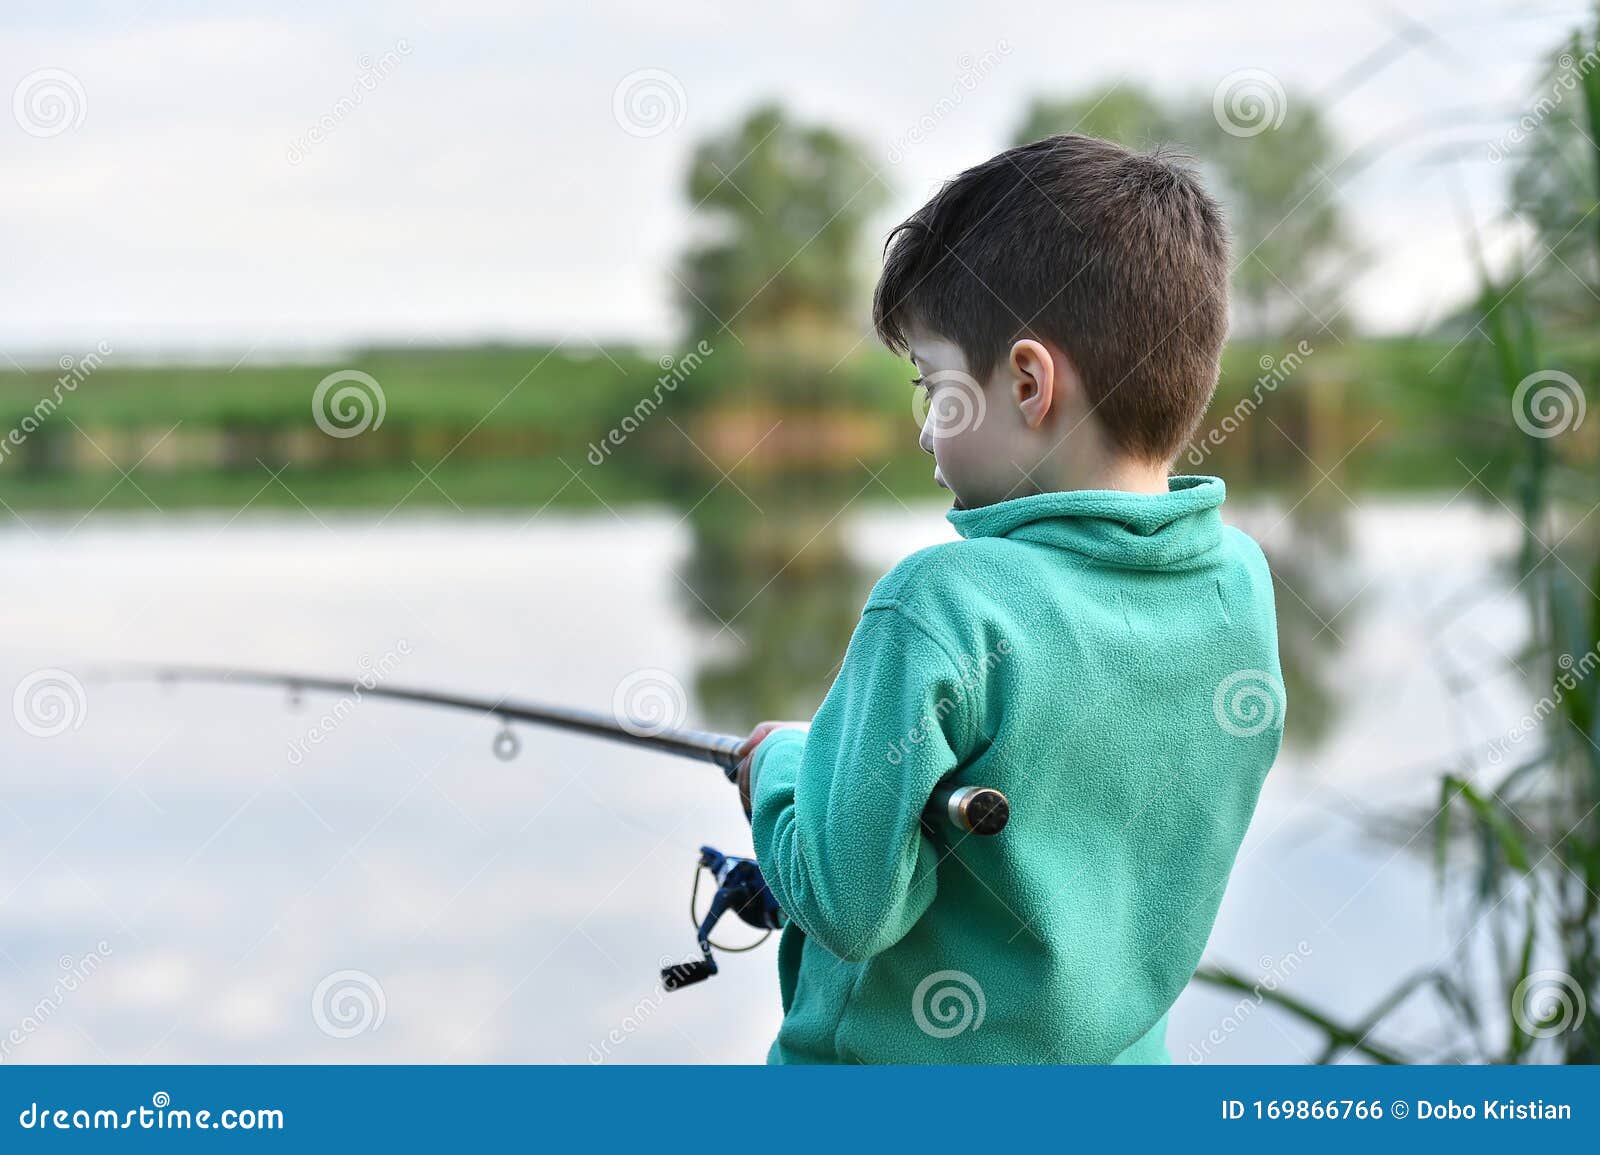 Child Boy Holds Fishing Rod Stock Photo - Image of activity, rear: 169866766